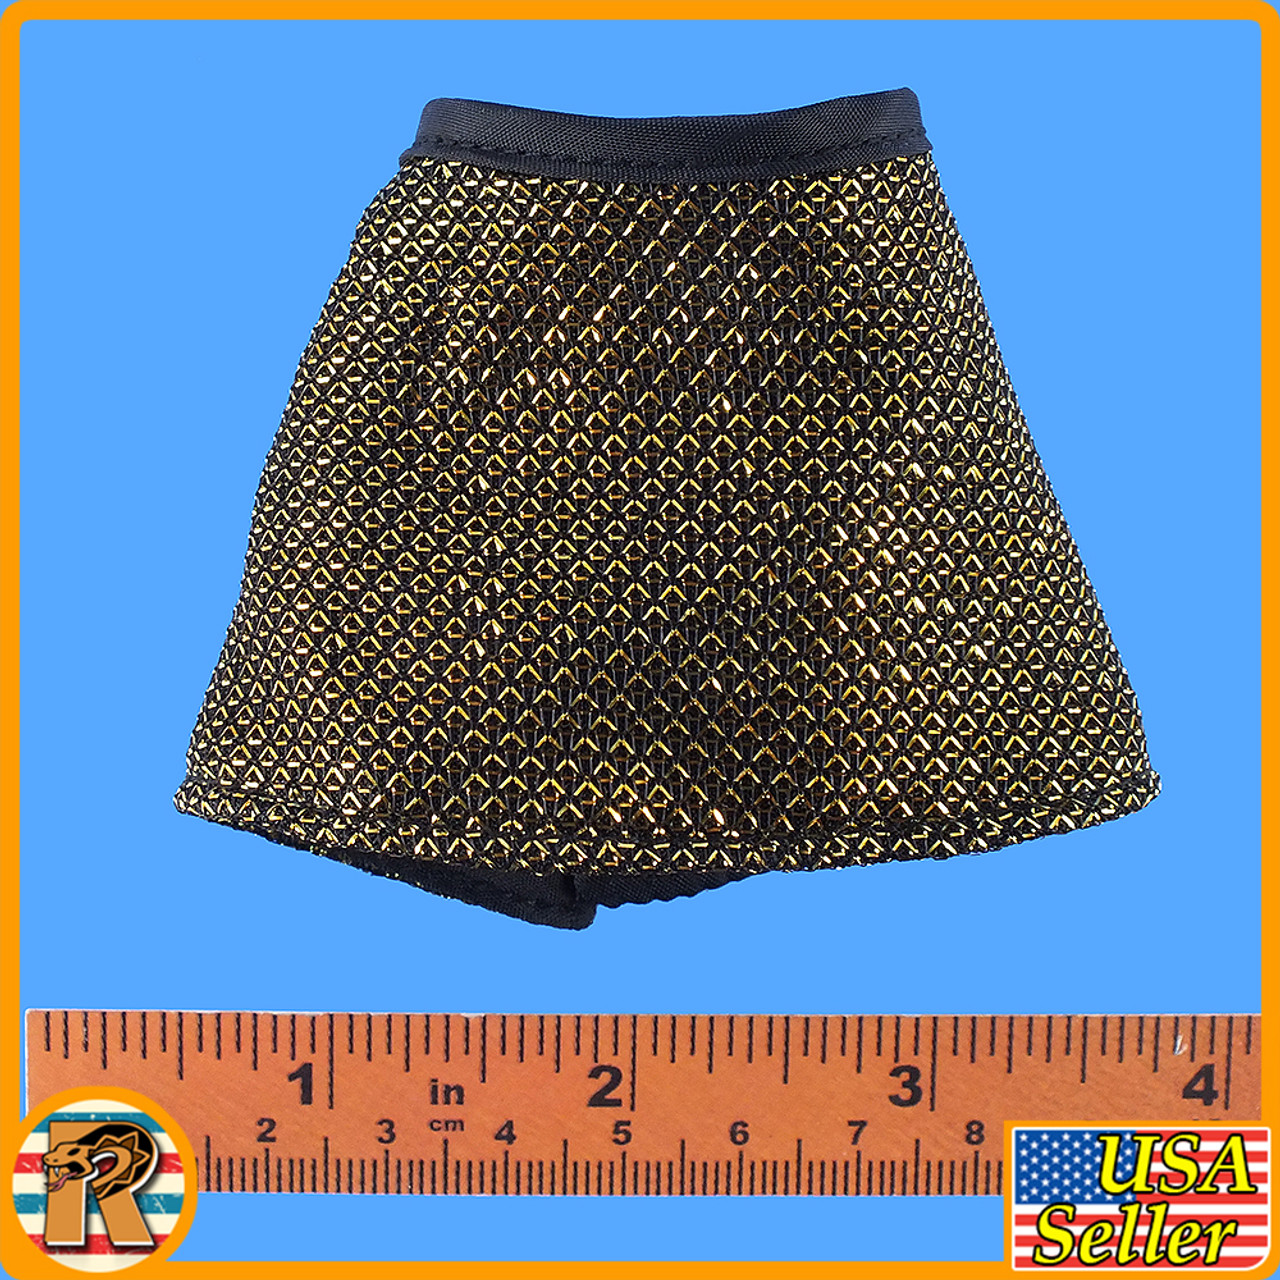 Saintess Knight (Golden) - Fabric Chainmail Skirt #1 - 1/6 Scale -